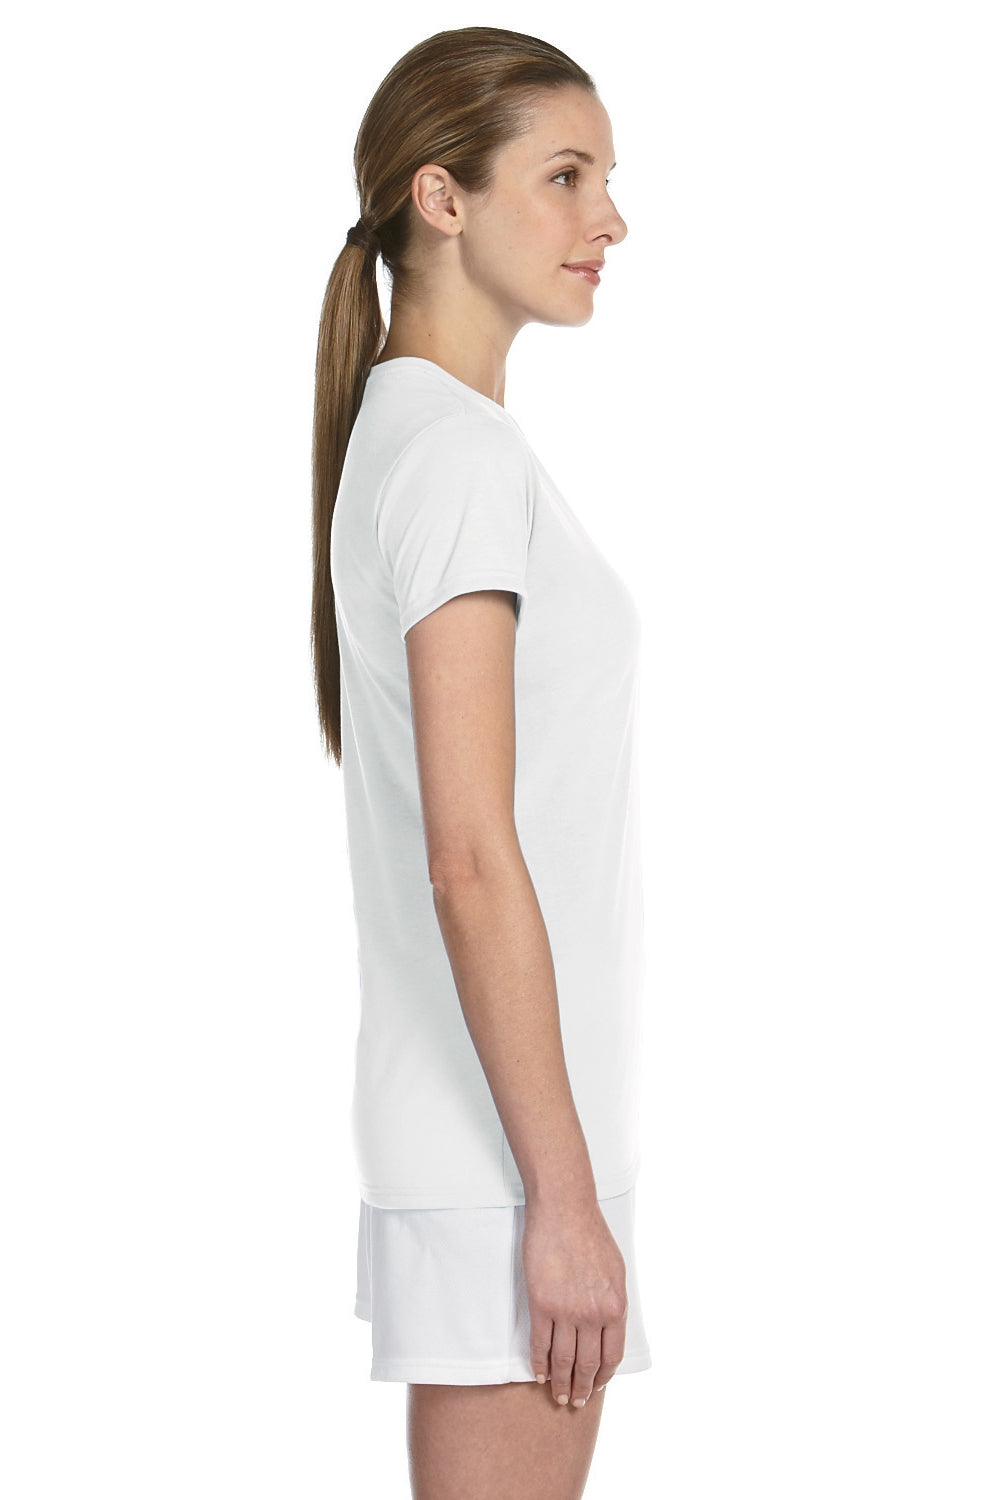 Gildan G420L Womens Performance Jersey Moisture Wicking Short Sleeve Crewneck T-Shirt White Side